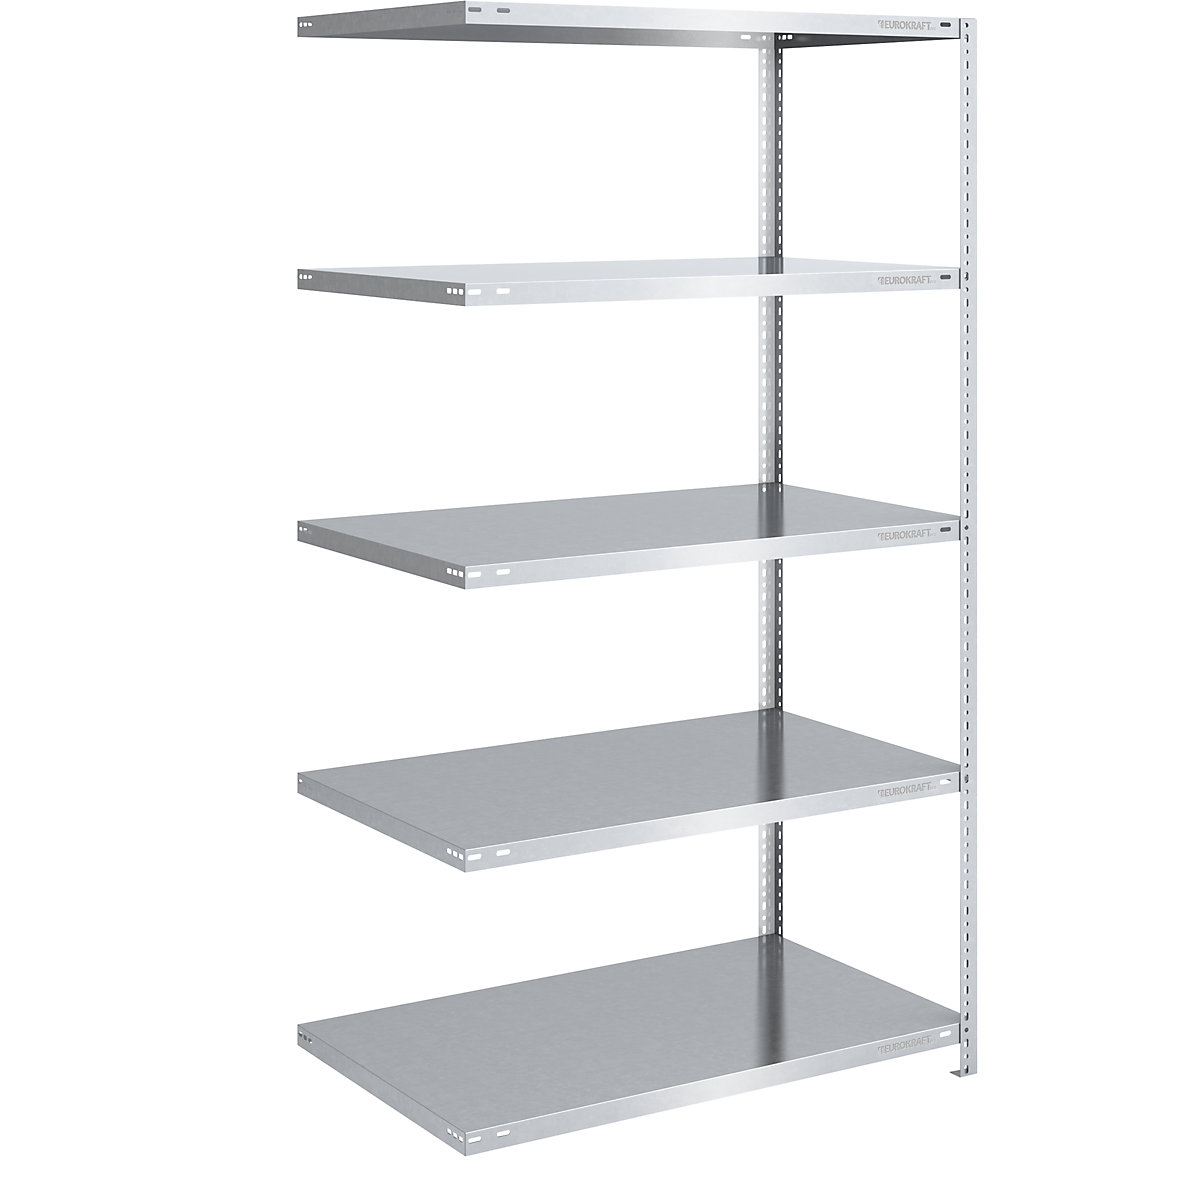 Bolt-together storage shelving, zinc plated, medium duty – eurokraft pro, shelf unit height 2000 mm, shelf width 1000 mm, depth 800 mm, extension shelf unit-6